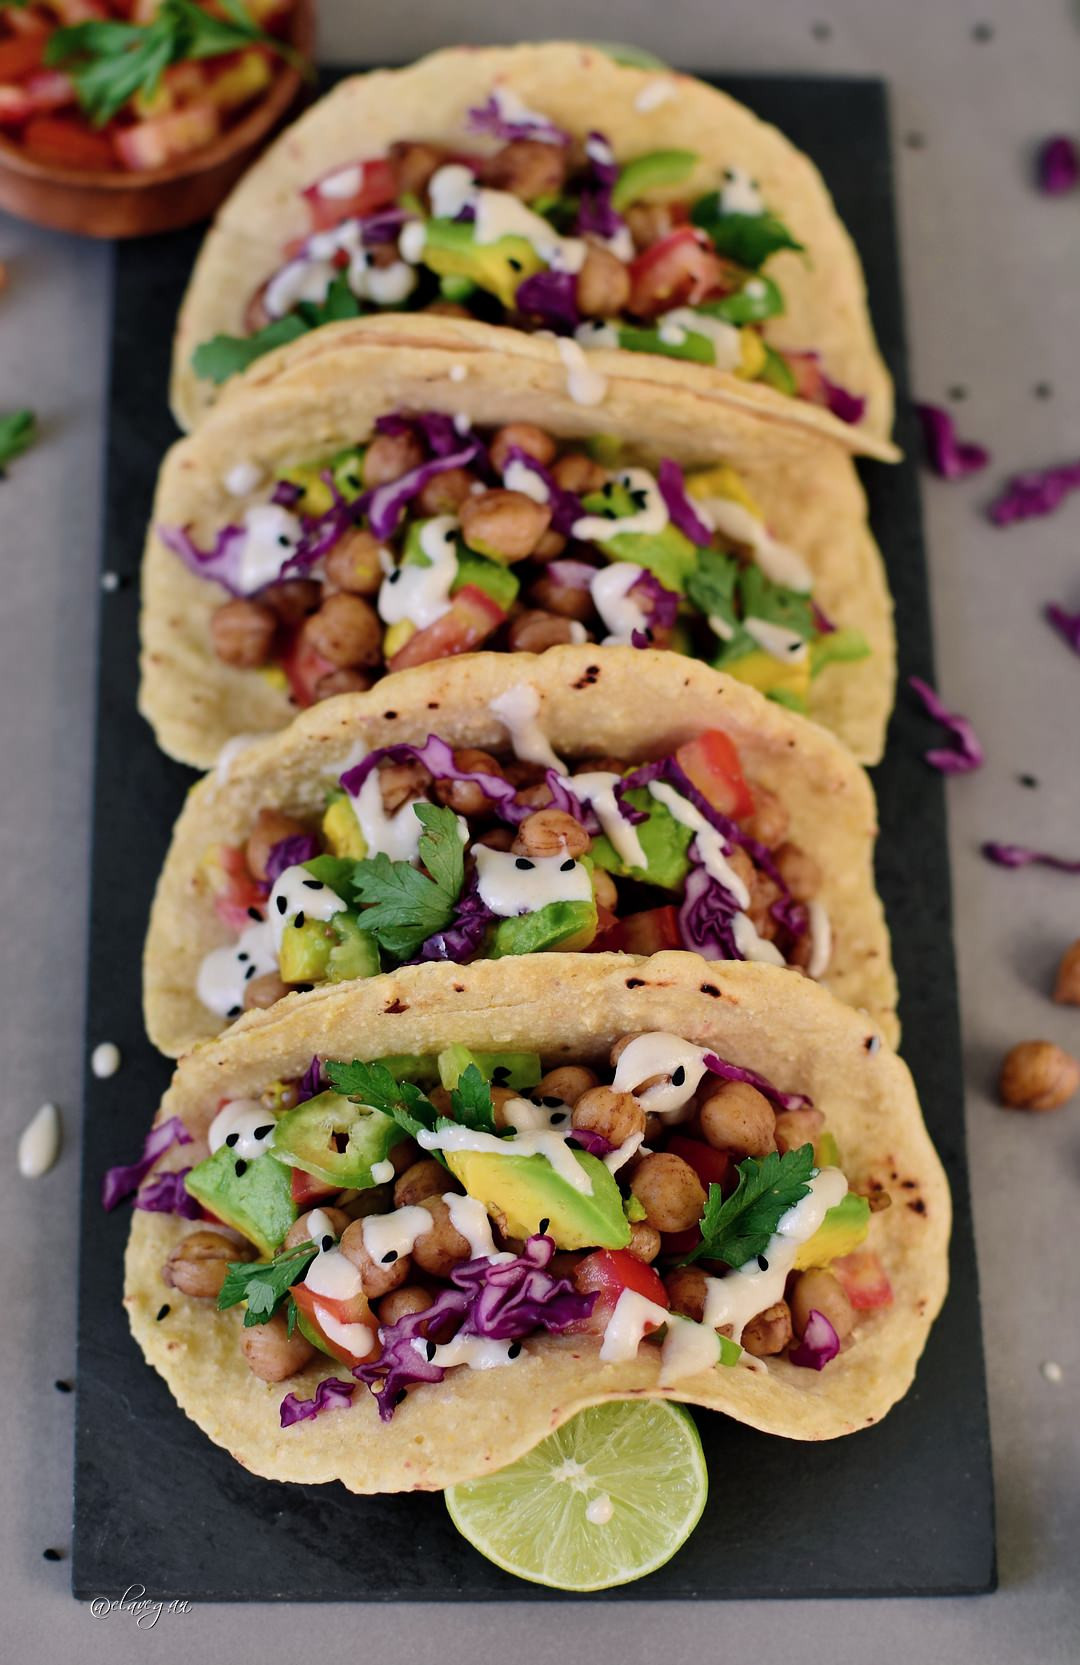 Healthy Vegan Gluten Free Recipes the 20 Best Ideas for Vegan Chickpea Tacos